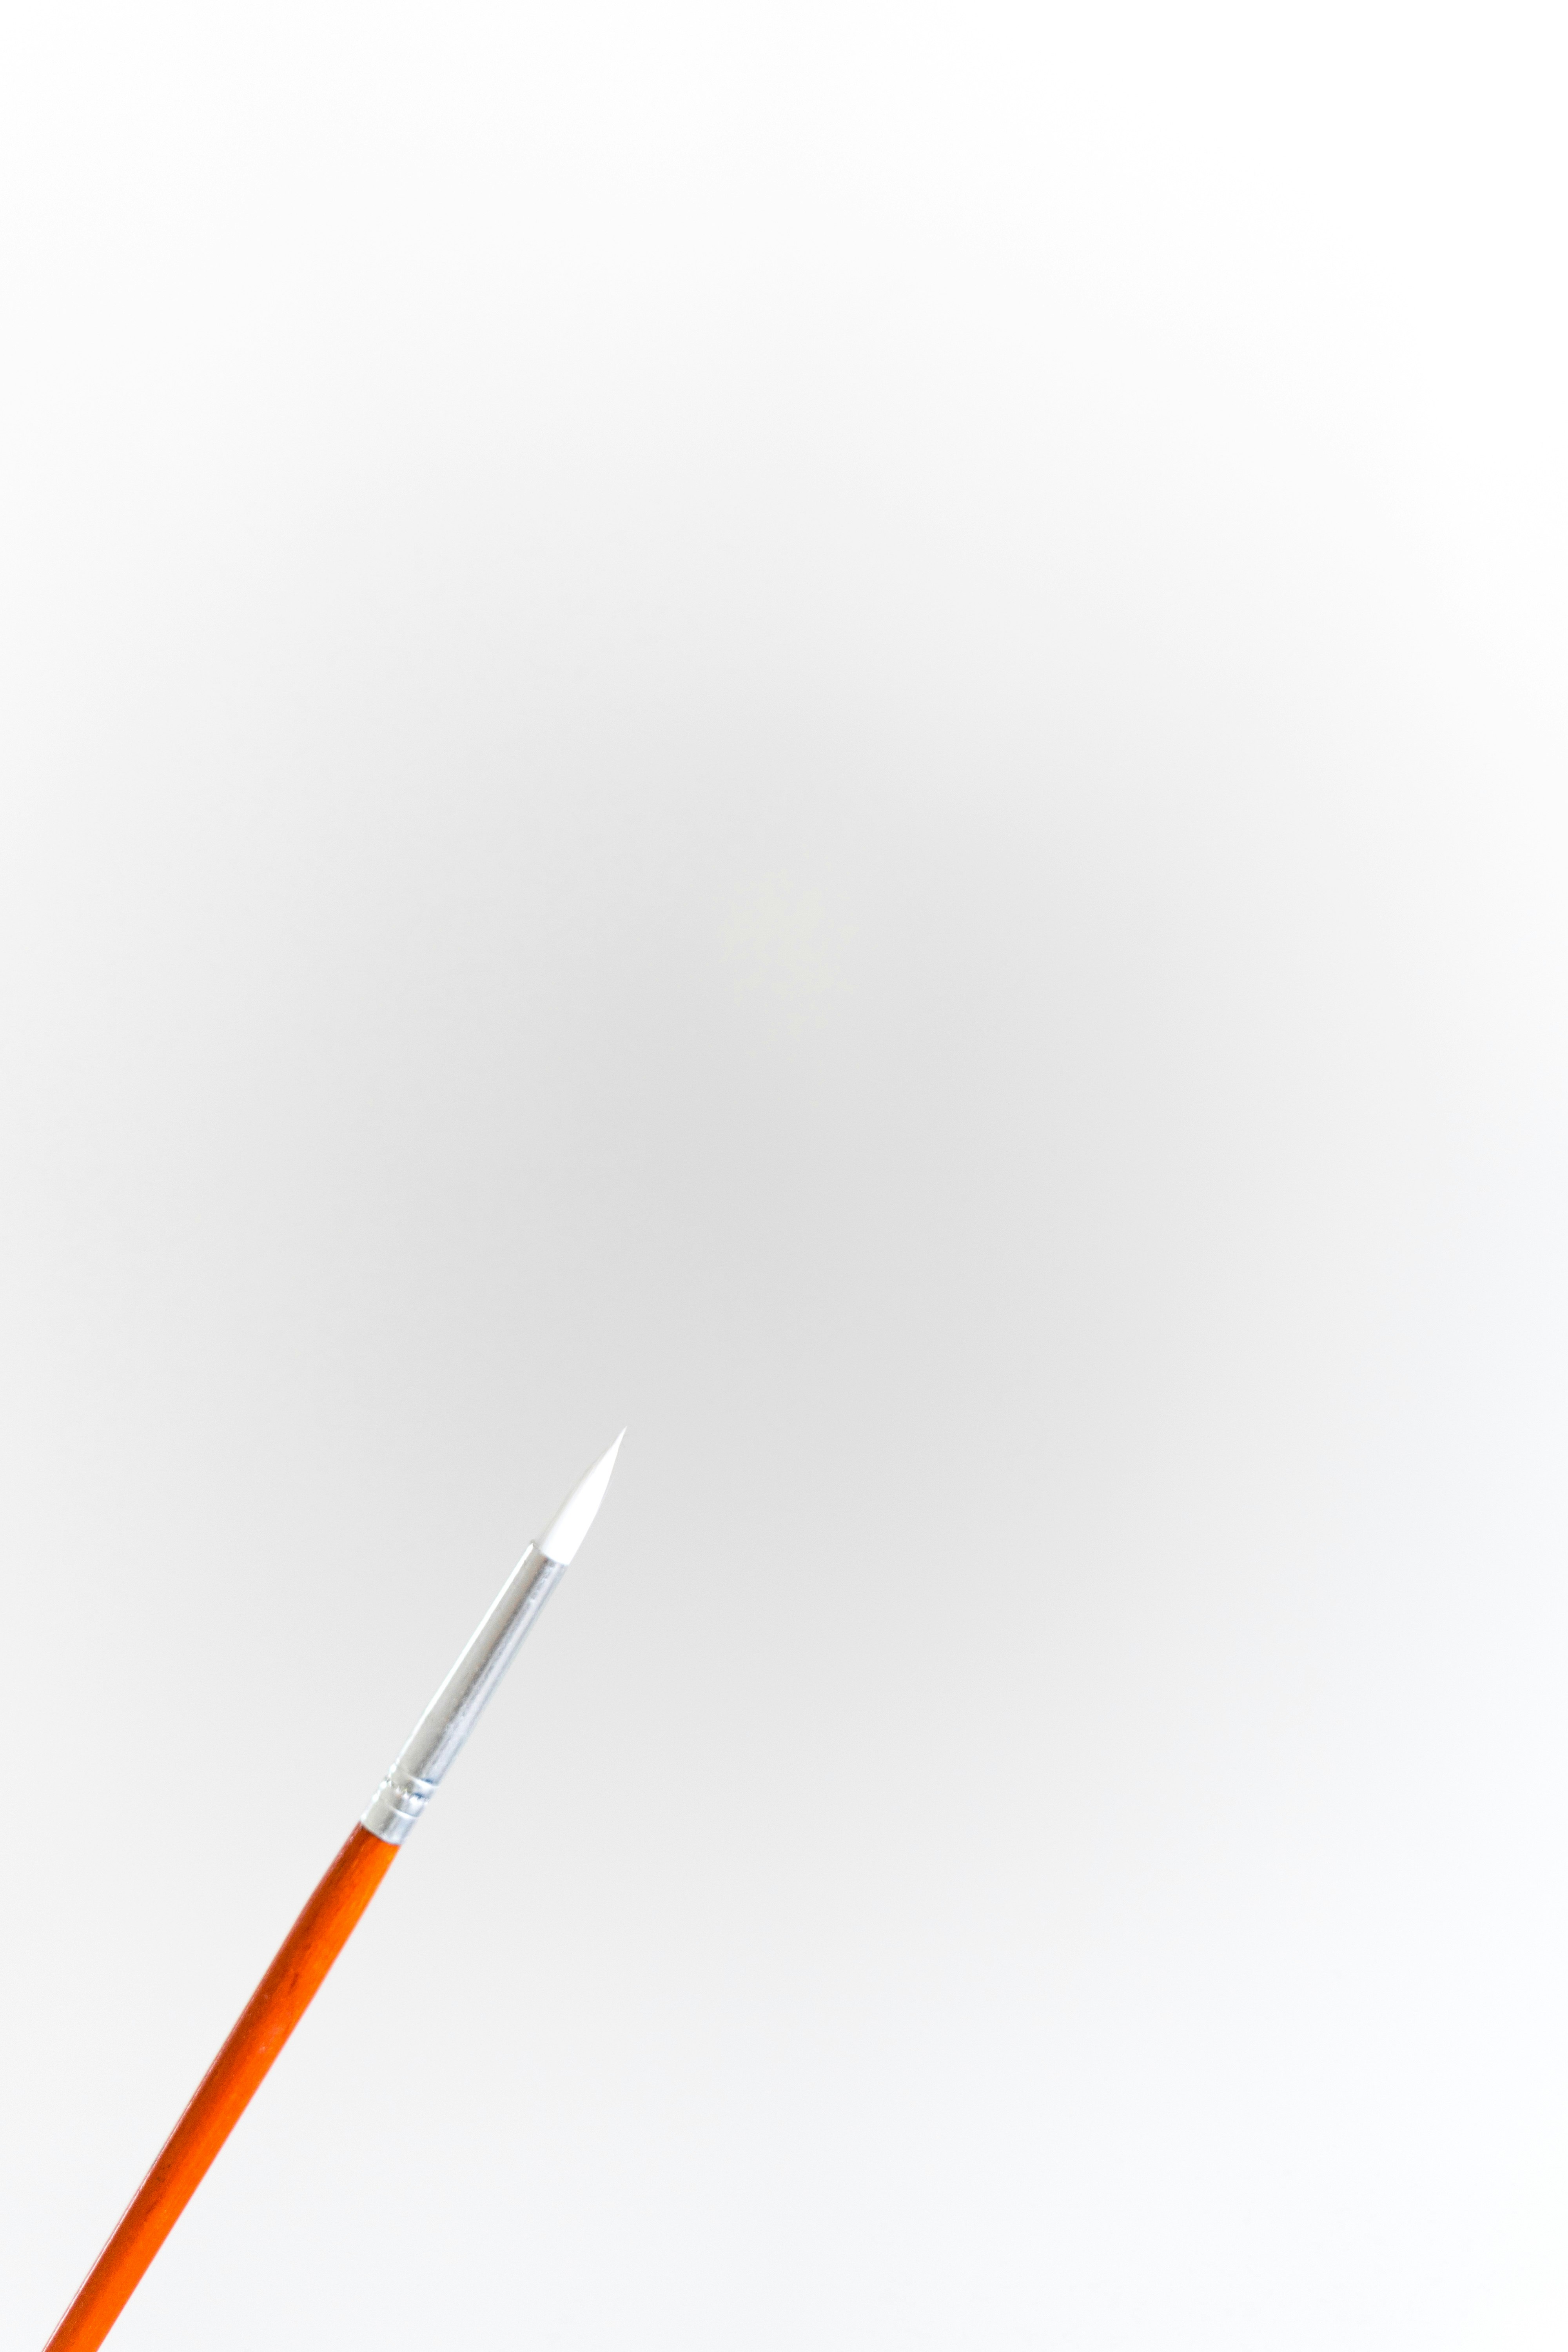 orange and white pen on white surface